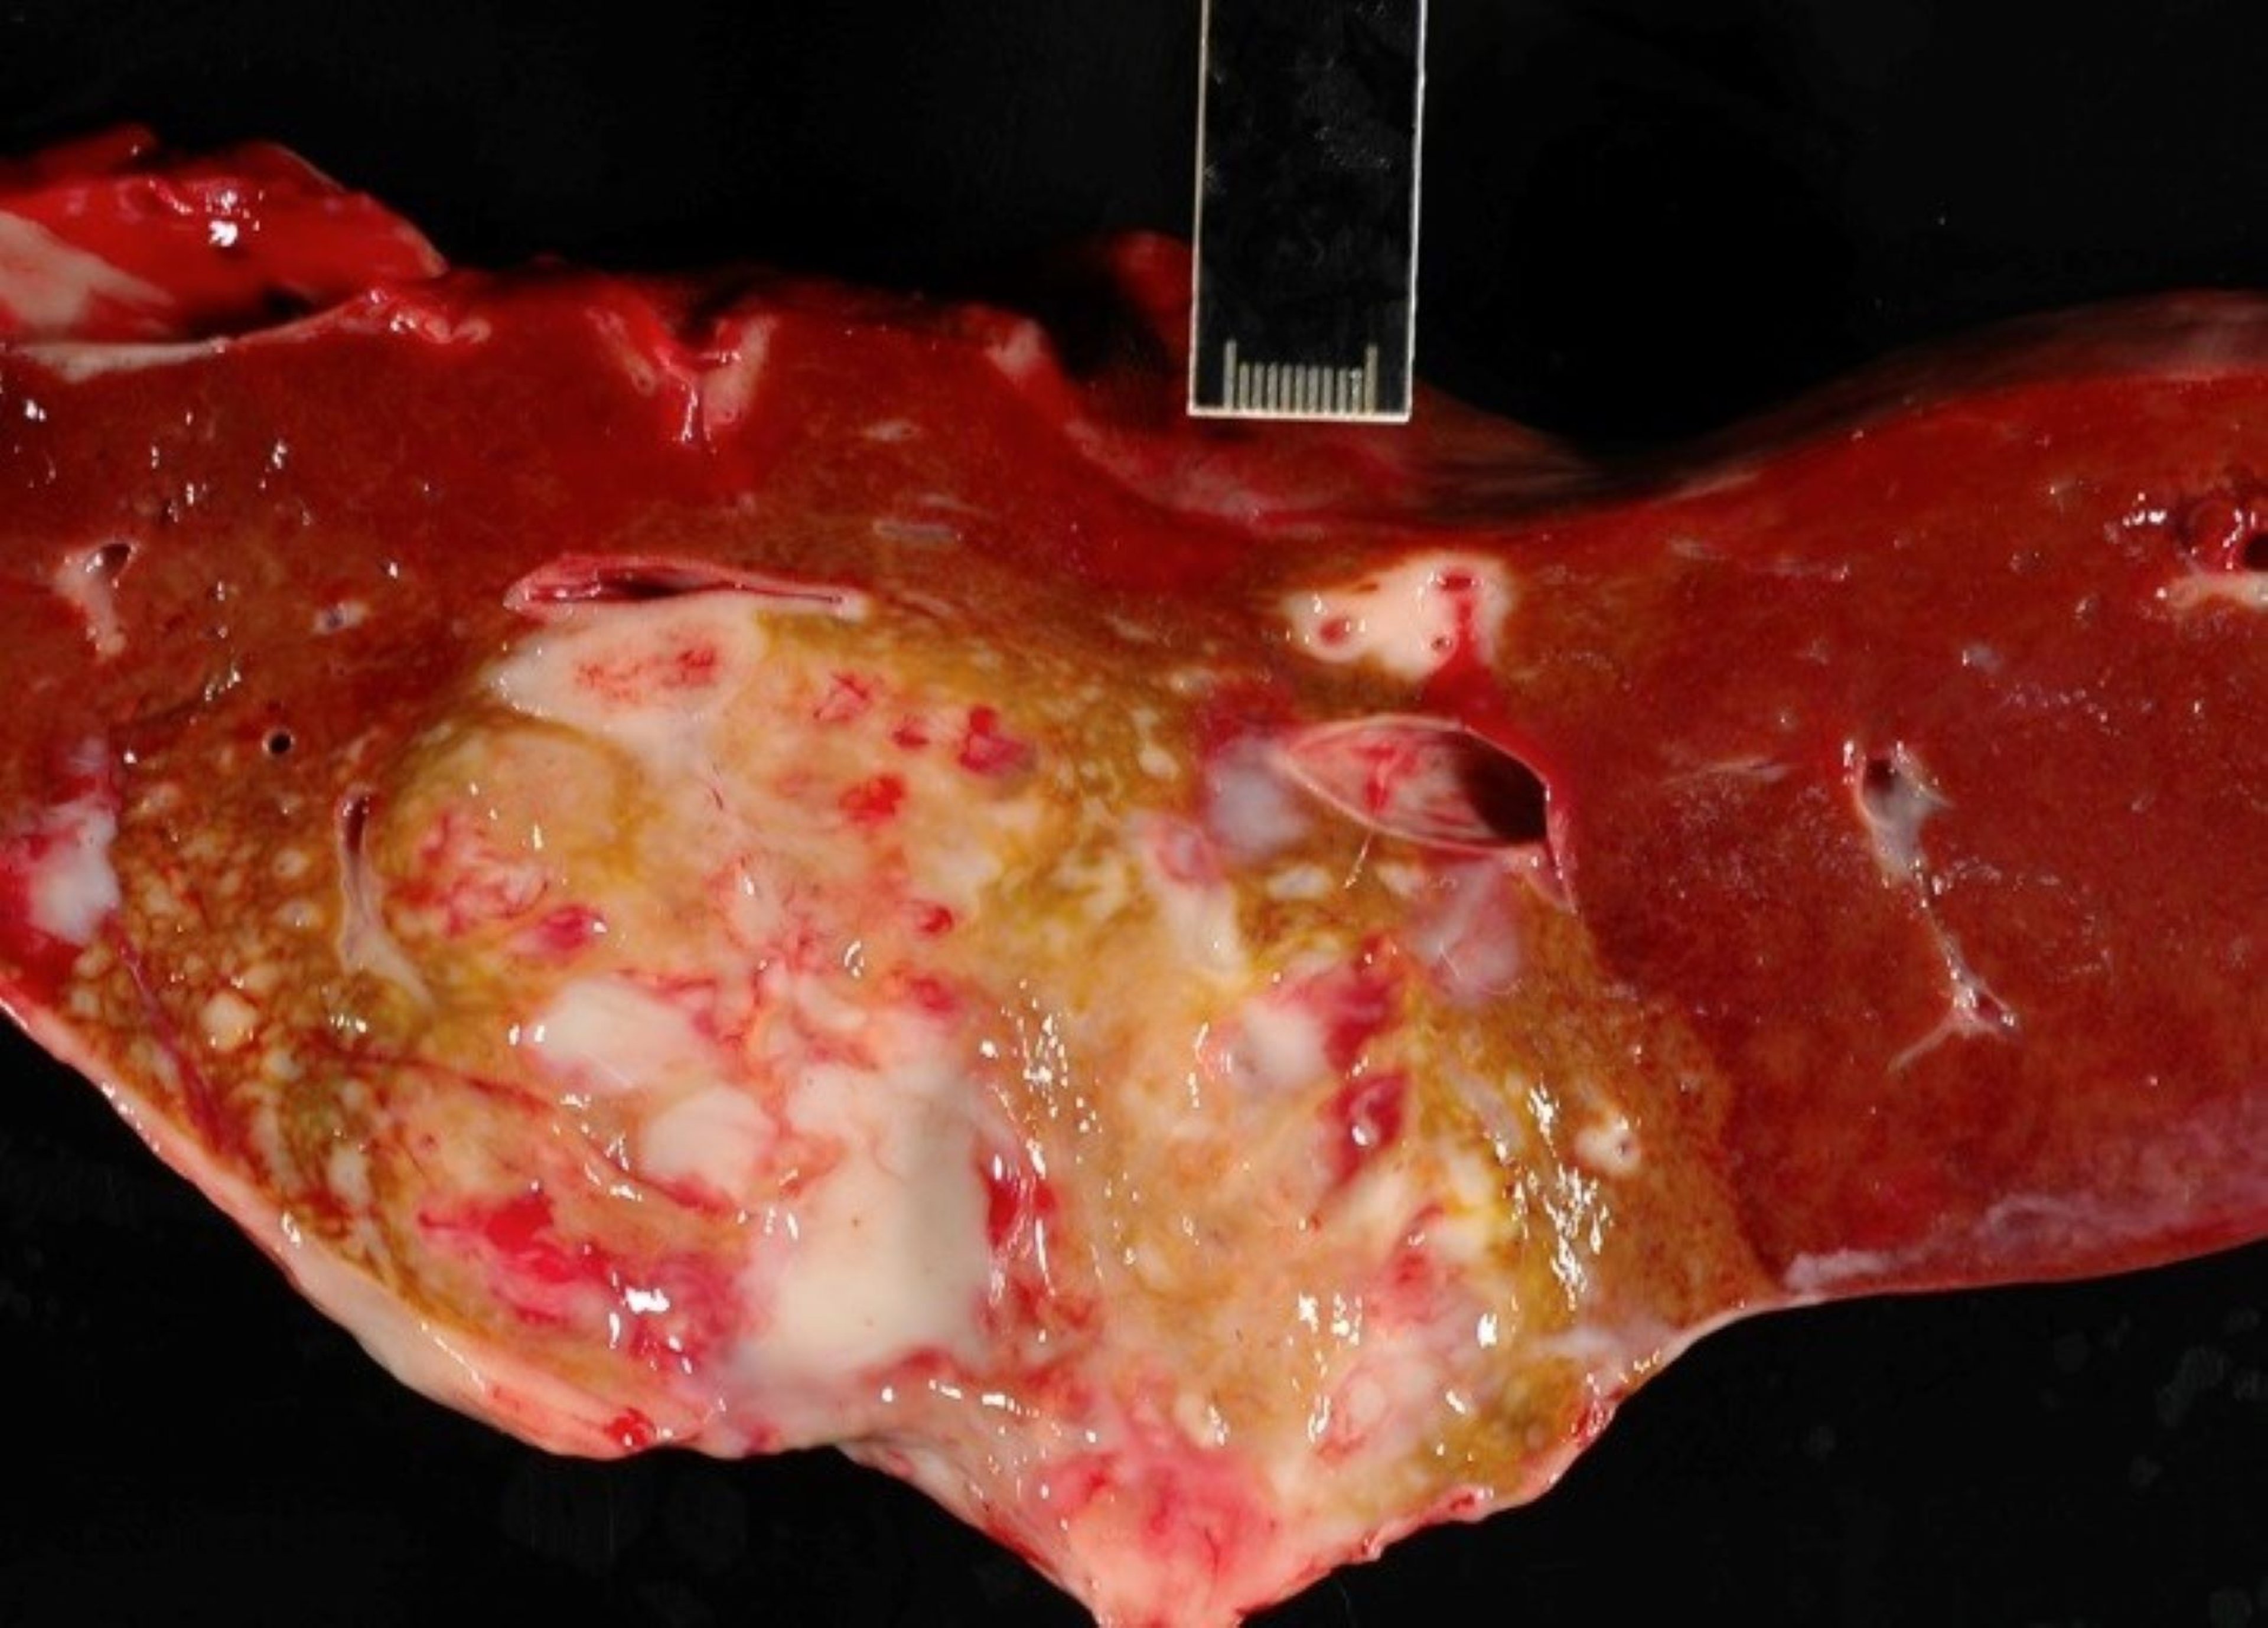 Lymphangitis, liver abscess, necropsy specimen, horse